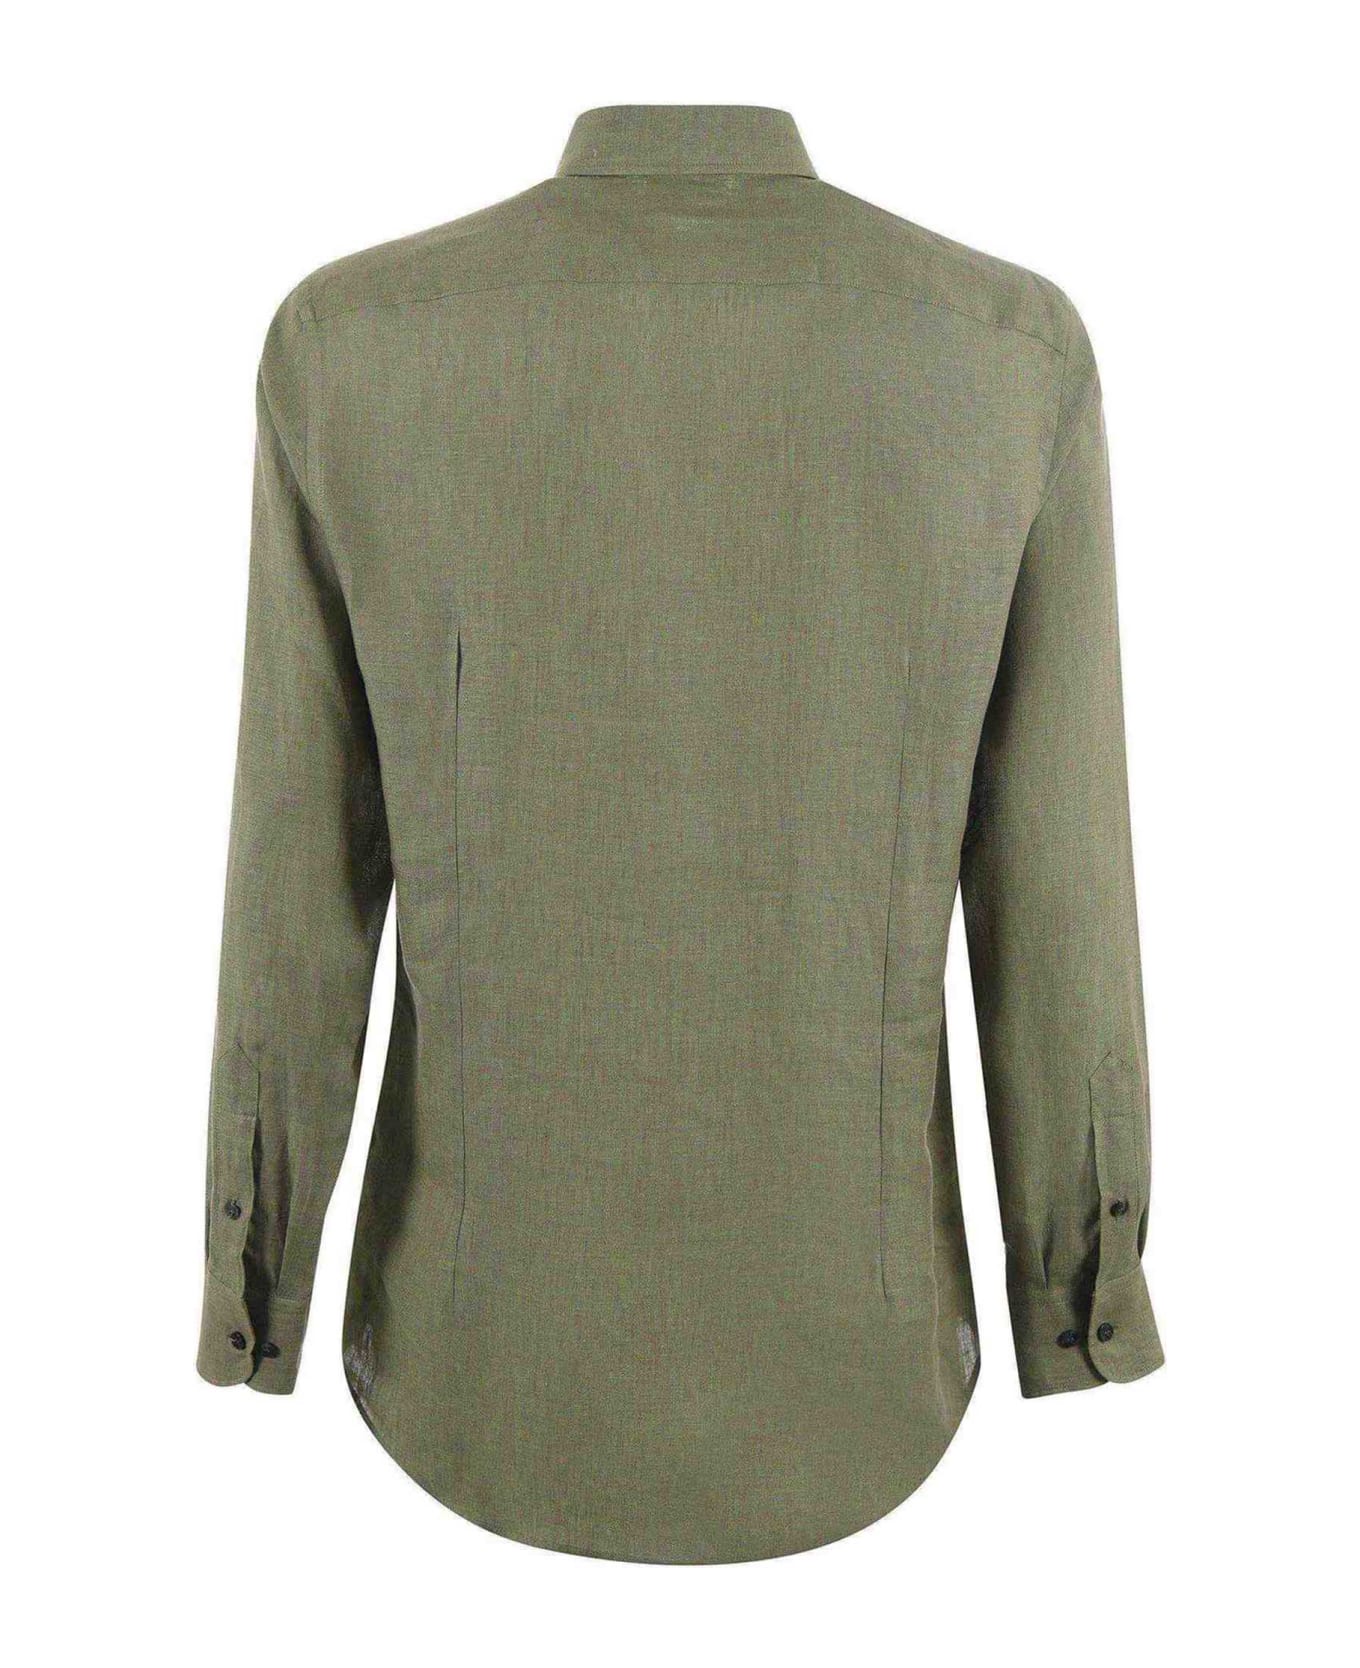 Etro Linen Shirt Military Green Iridescent - Verde militare